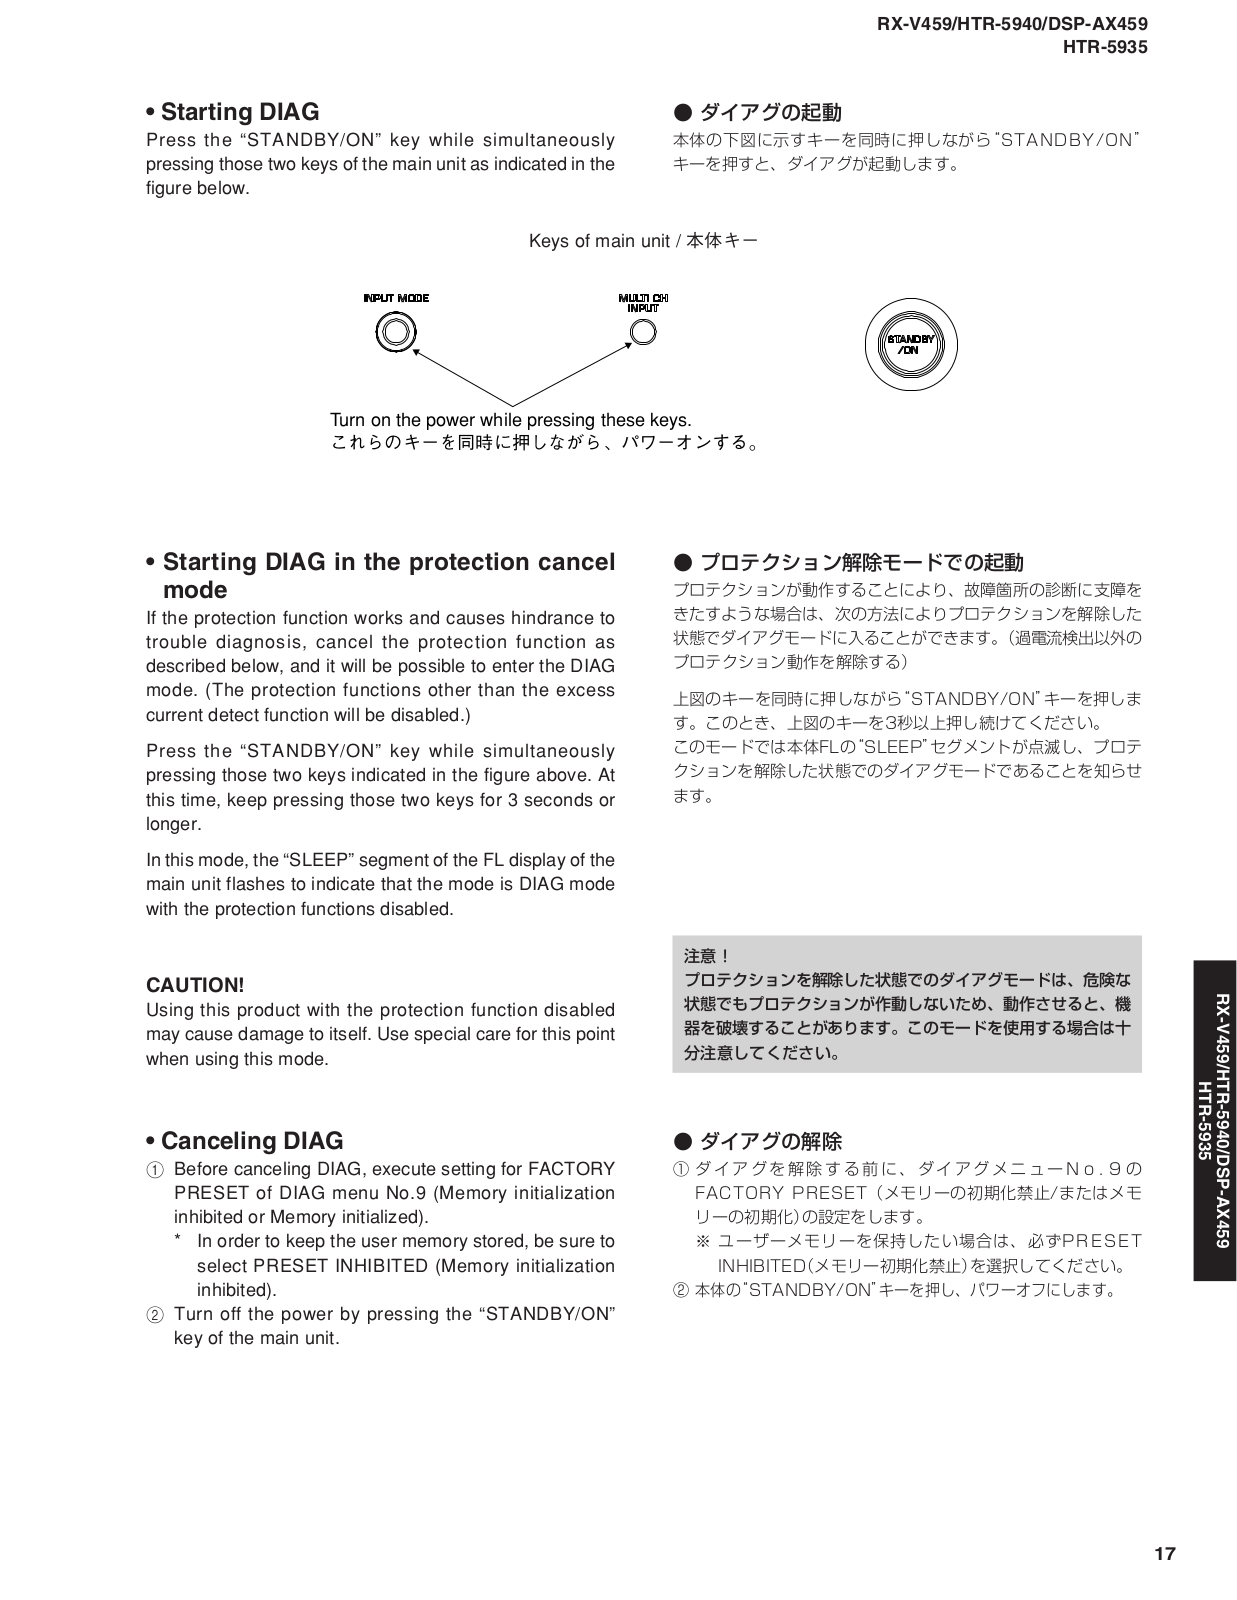 Yamaha RX-V459, HTR-5940, DSP-AX459, HTR-5935 Service manual